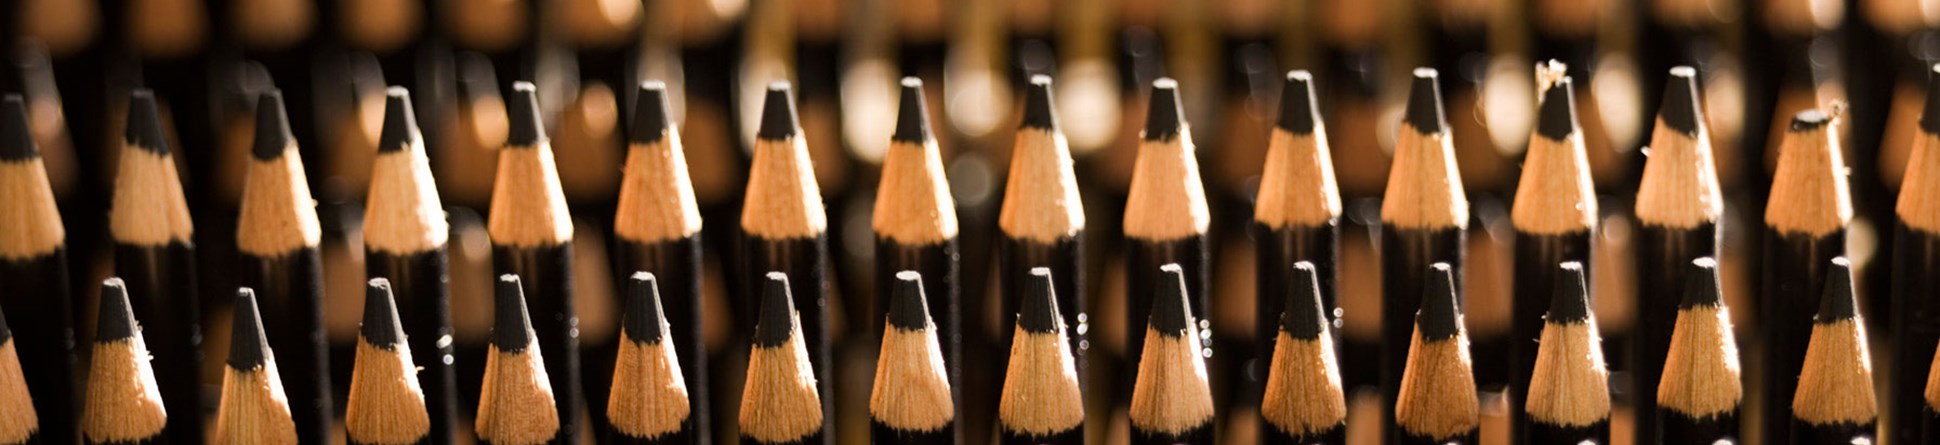 Rows of pencil tips.